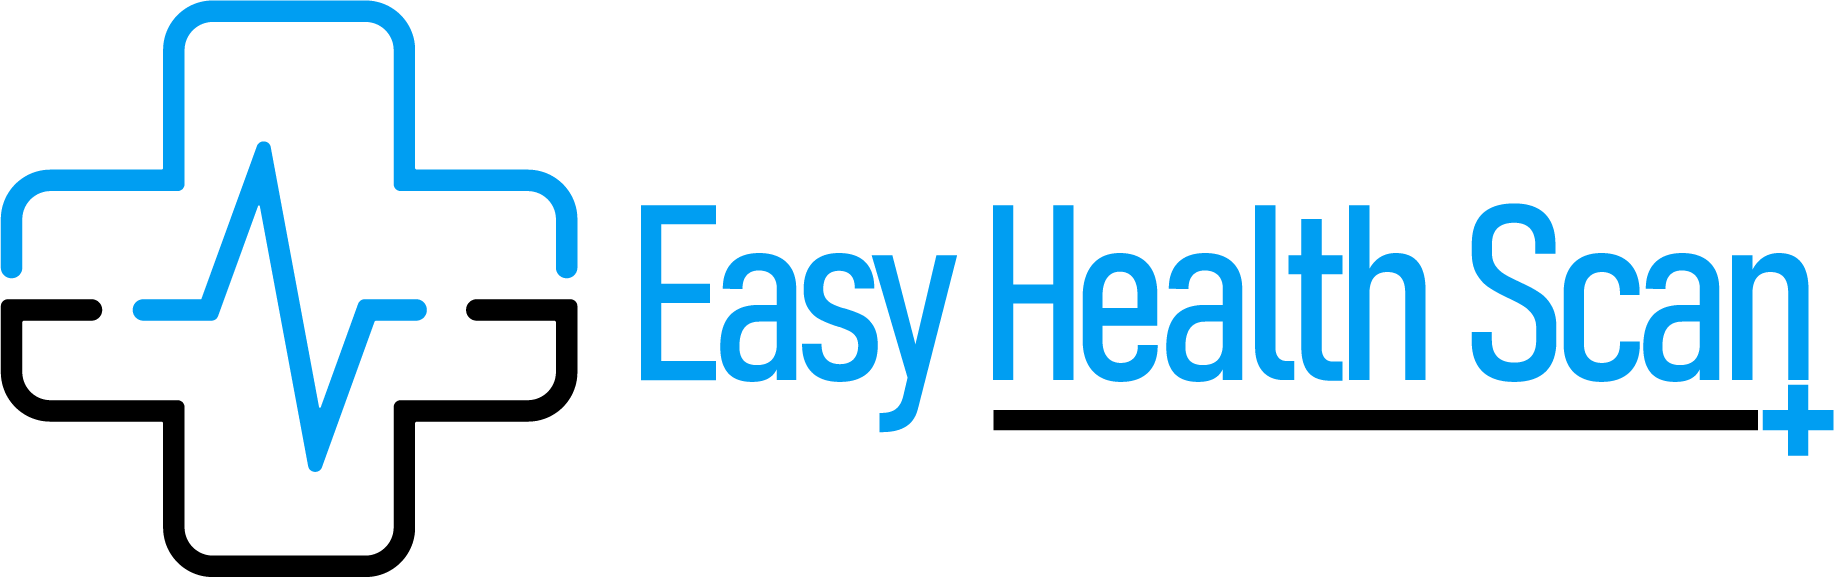 Easy Health Scan - Logo